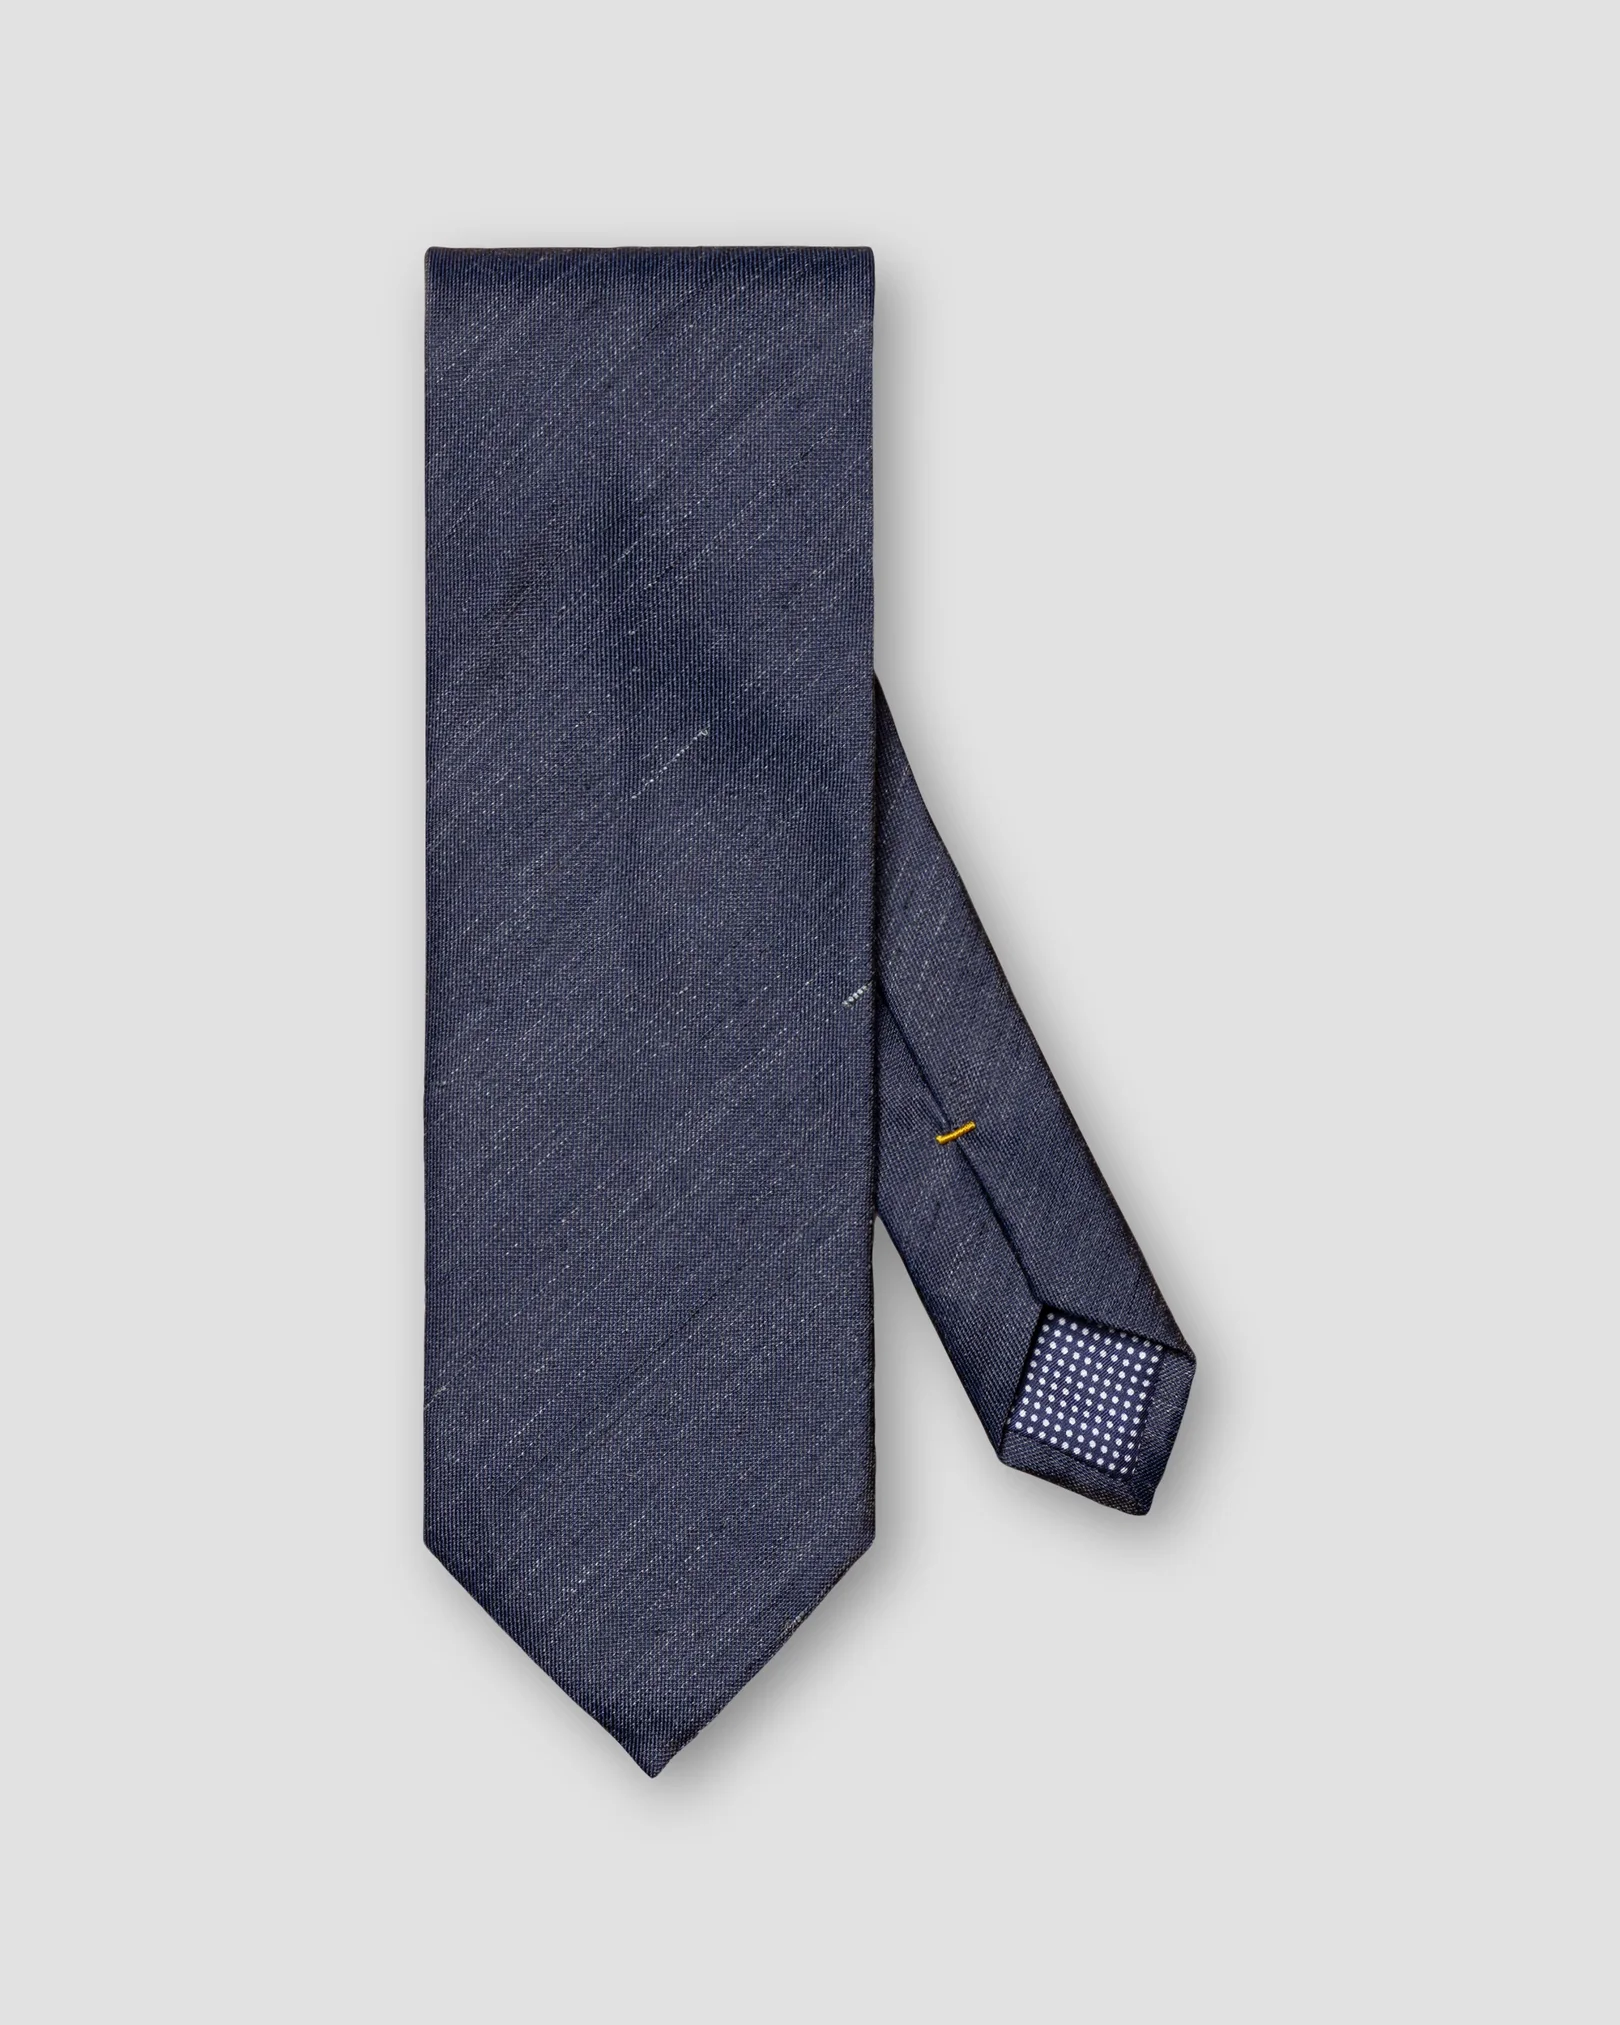 Eton - navy blue tactile tie